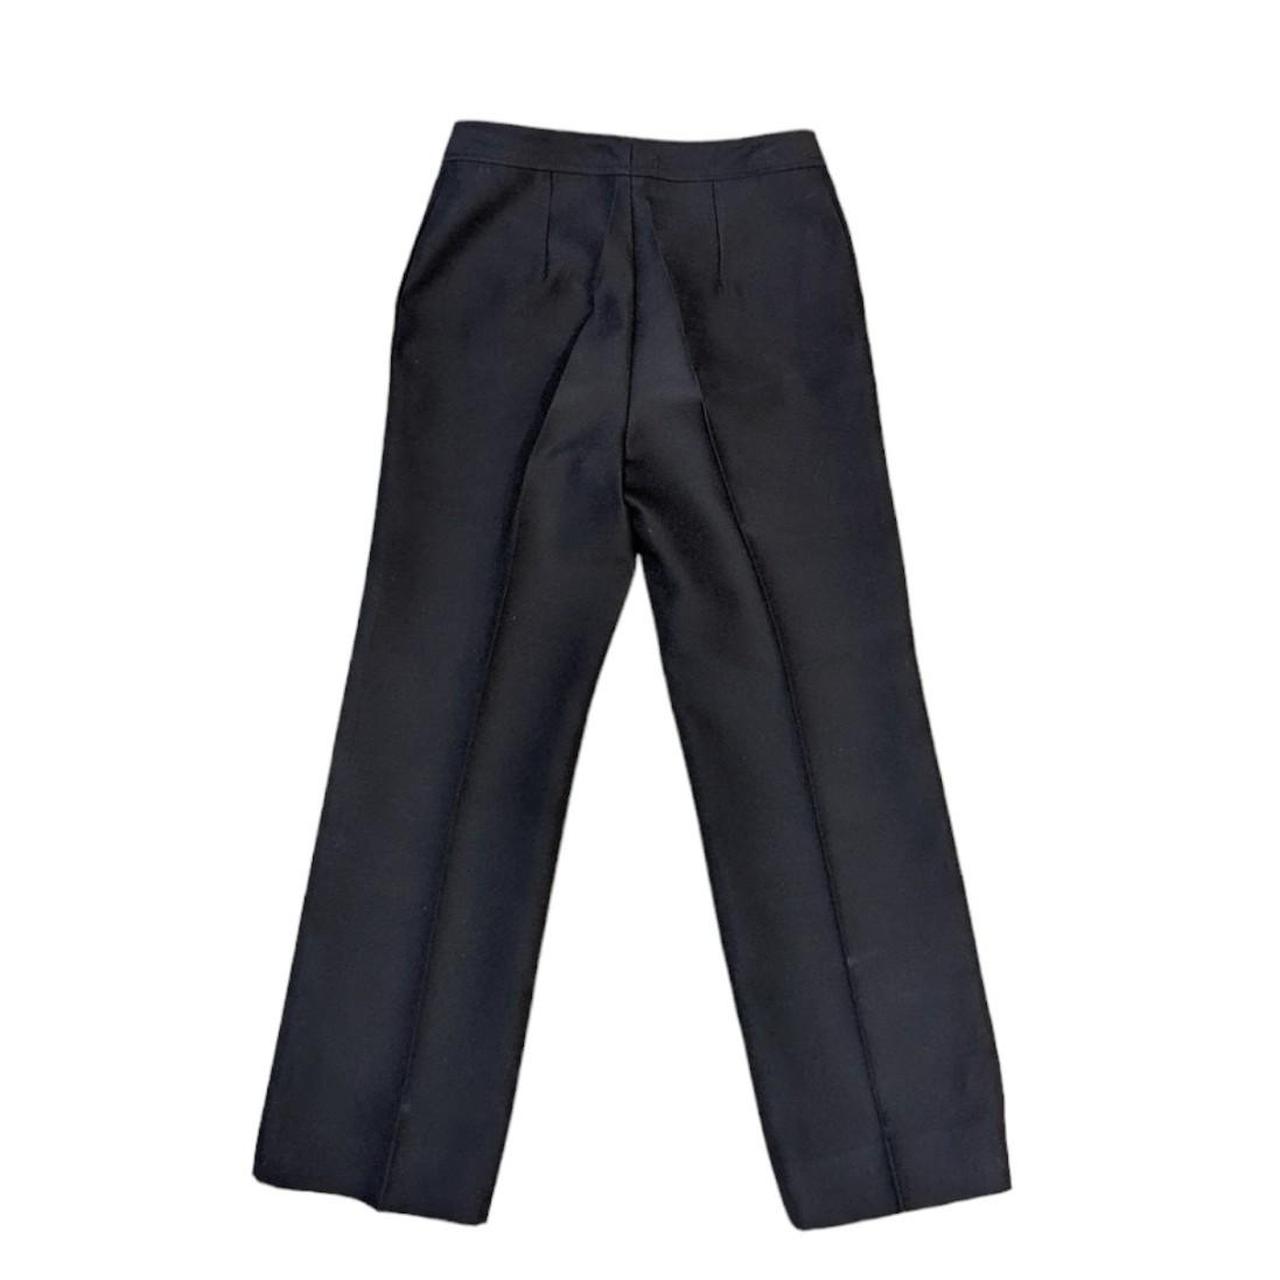 Vintage Suit Trousers 👖 Super straight, slightly... - Depop